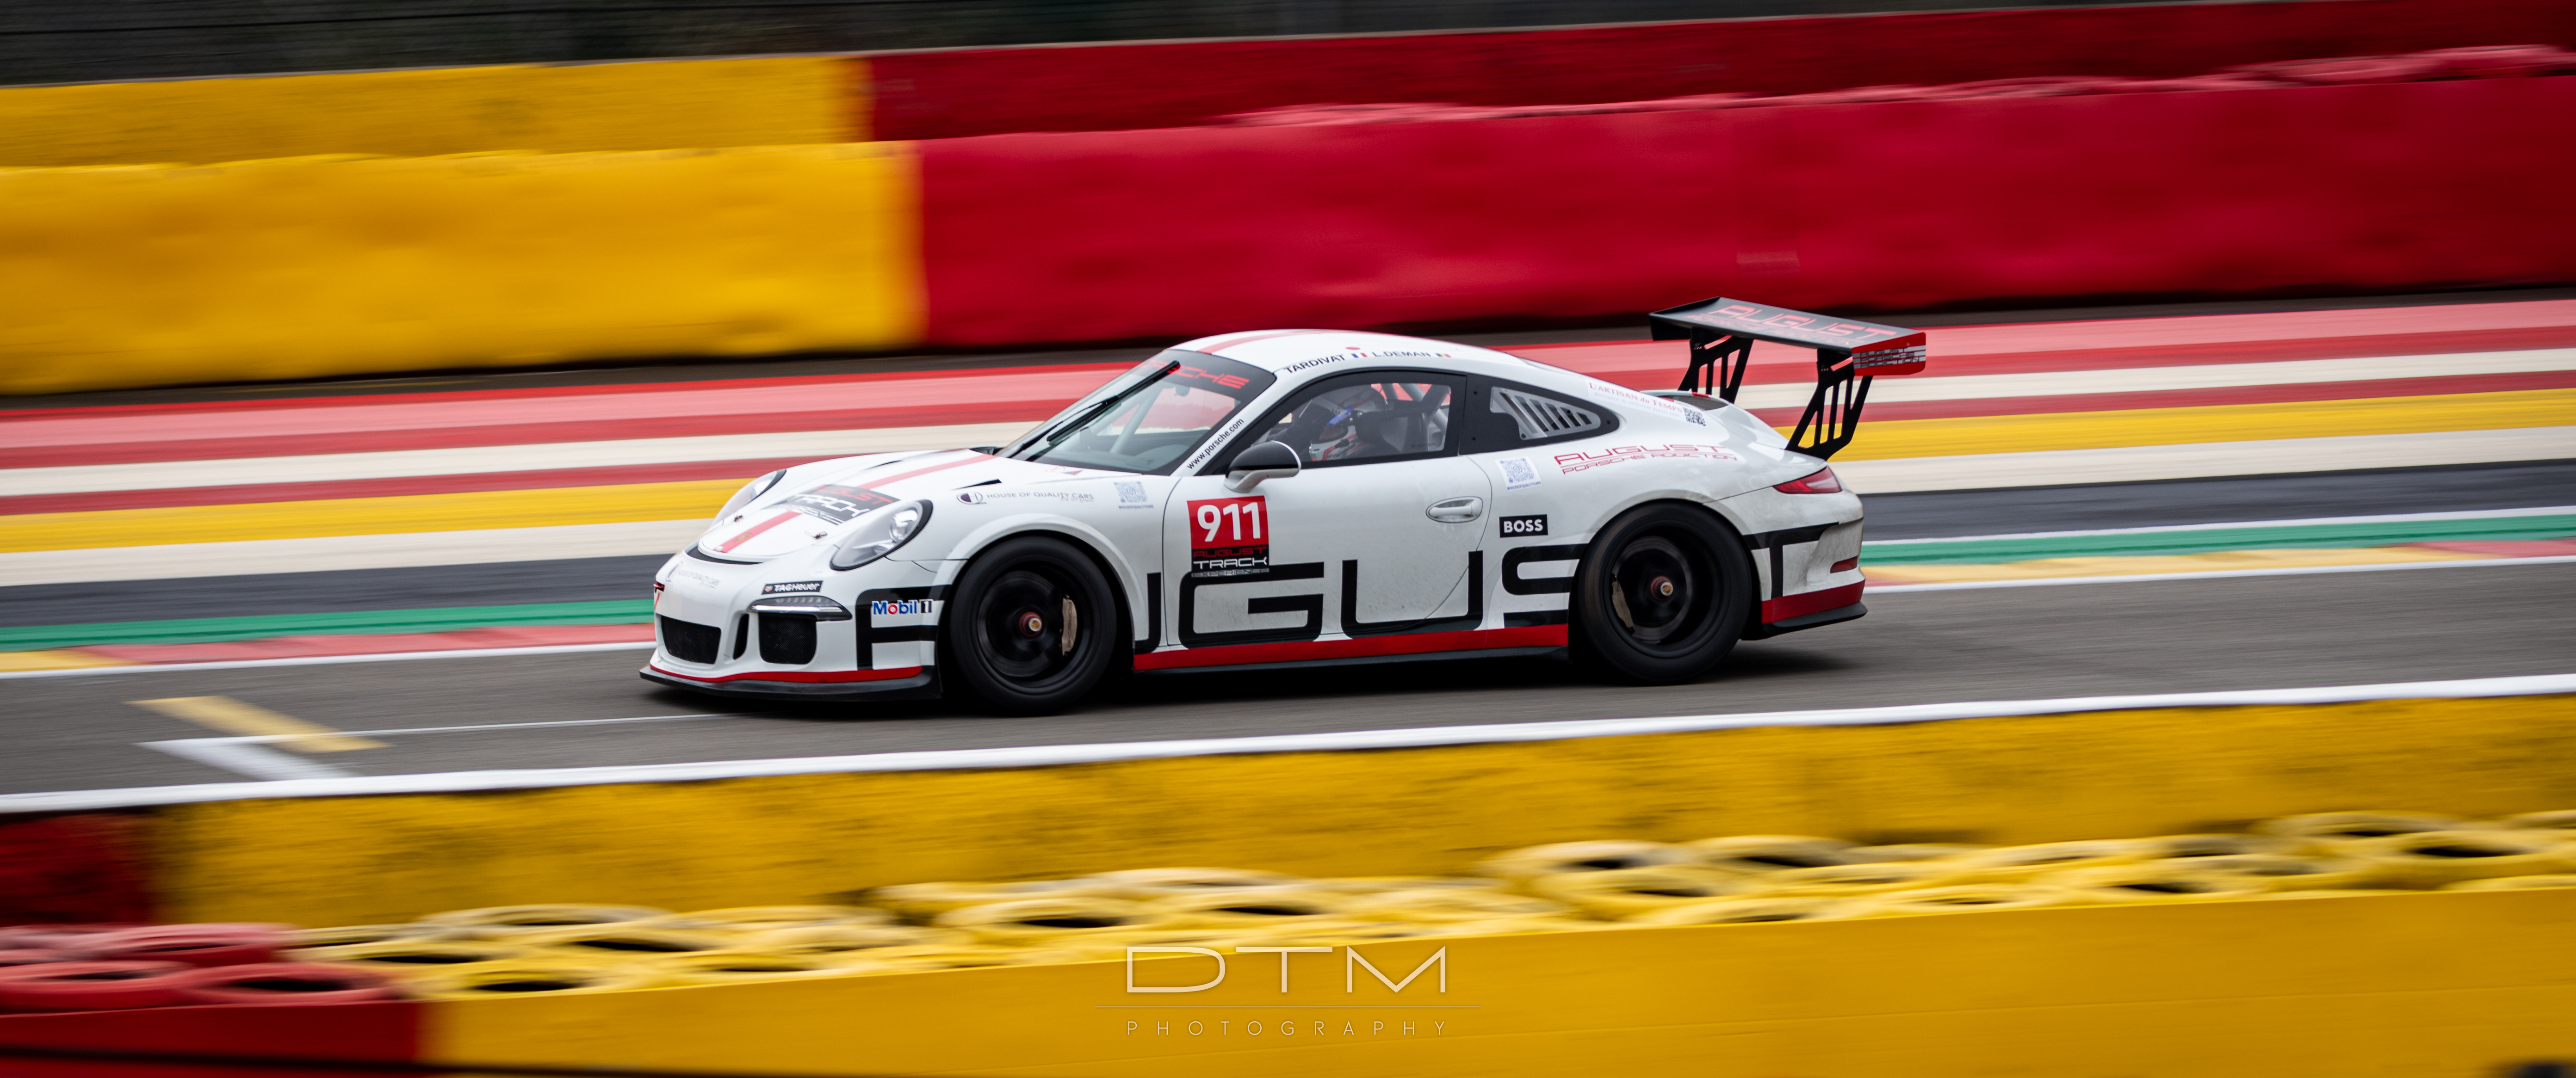 Spa Francorchamps Spa Francorchamps Porsche Porsche 911 Dtm Photography Car Side View Race Tracks Ra 5568x2331